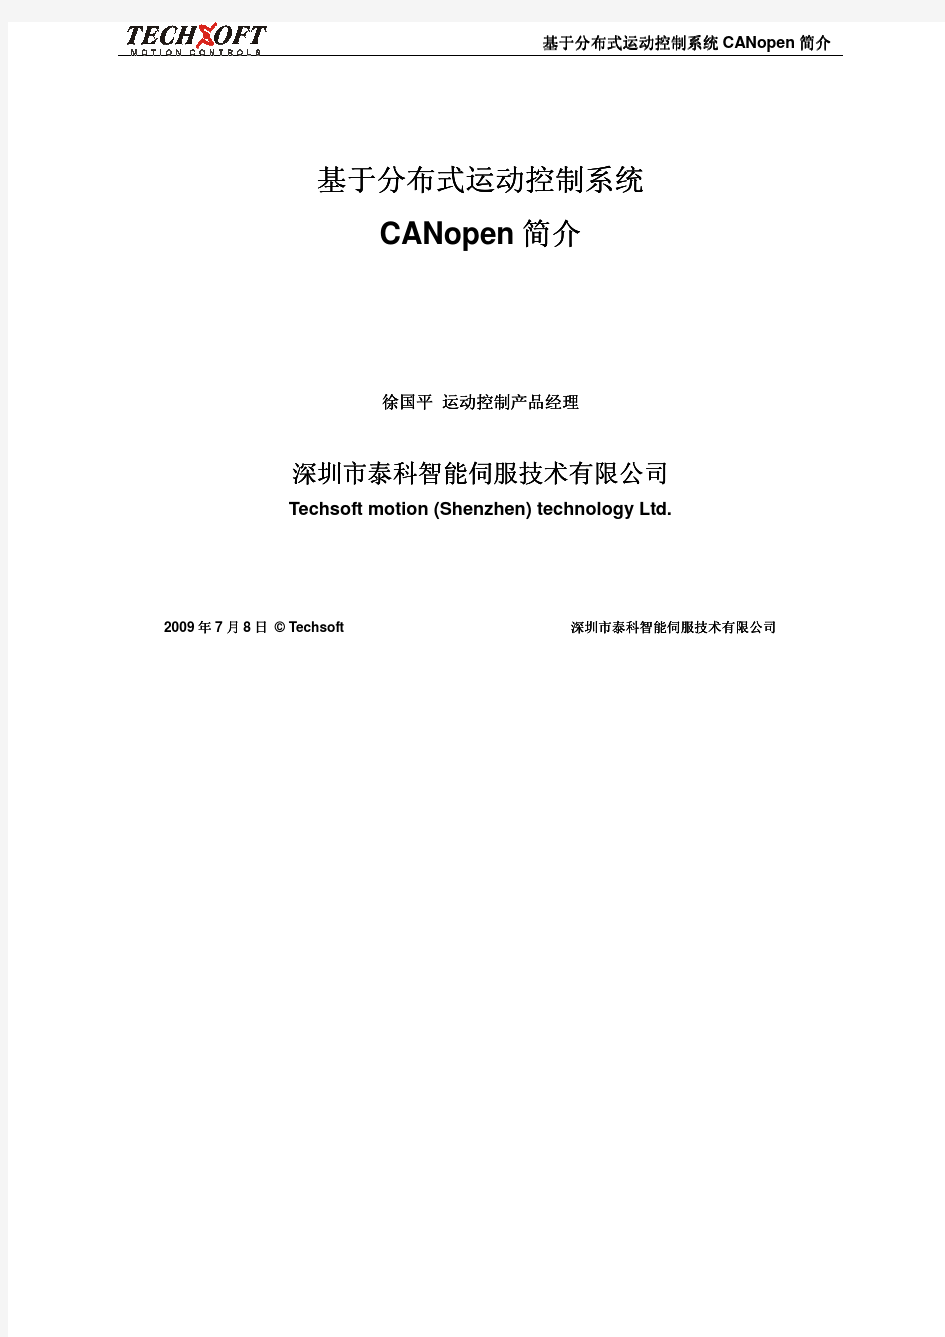 CANOPEN_DSP402运动控制简介